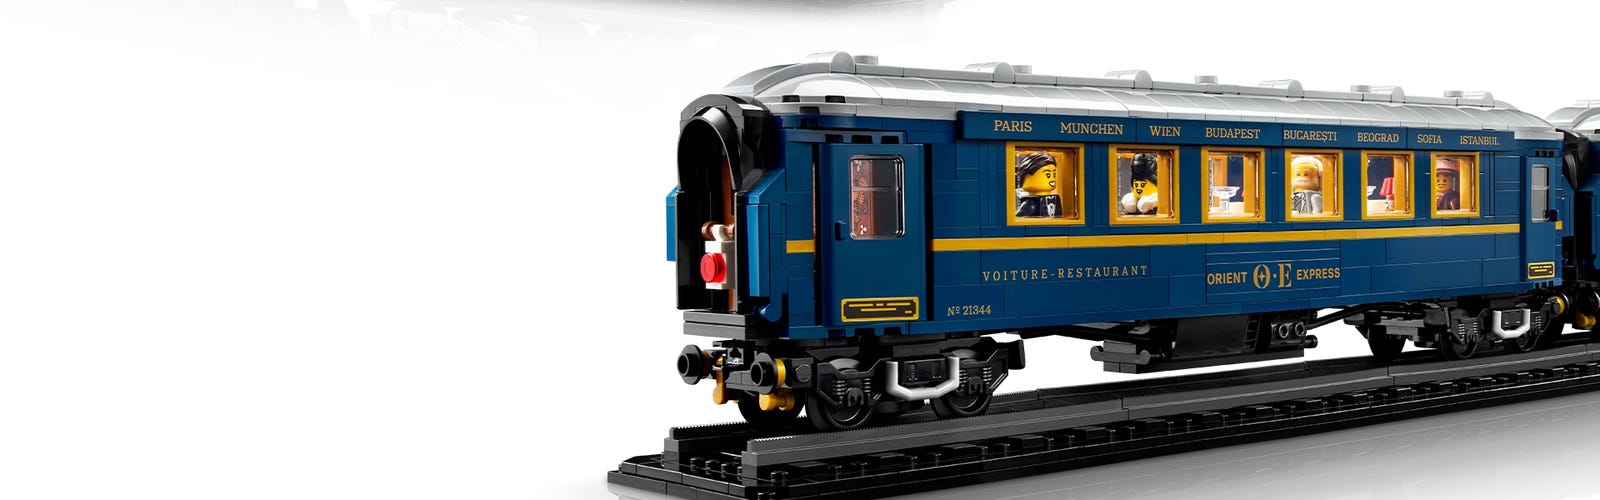 LEGO Unveils LEGO Ideas Orient Express Set - The Toy Book